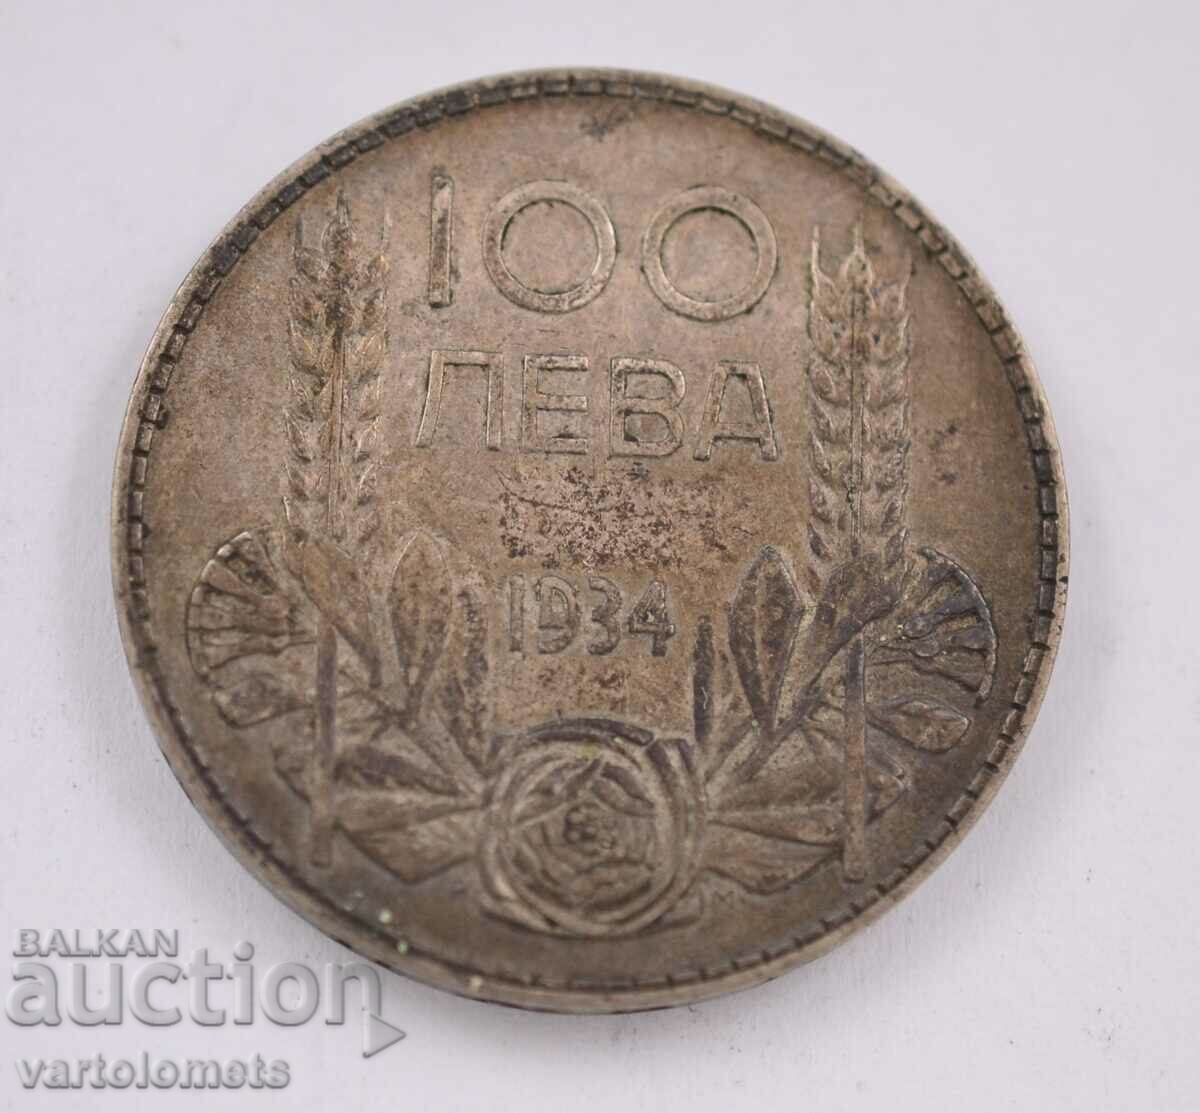 100 Leva 1934 - Βουλγαρία